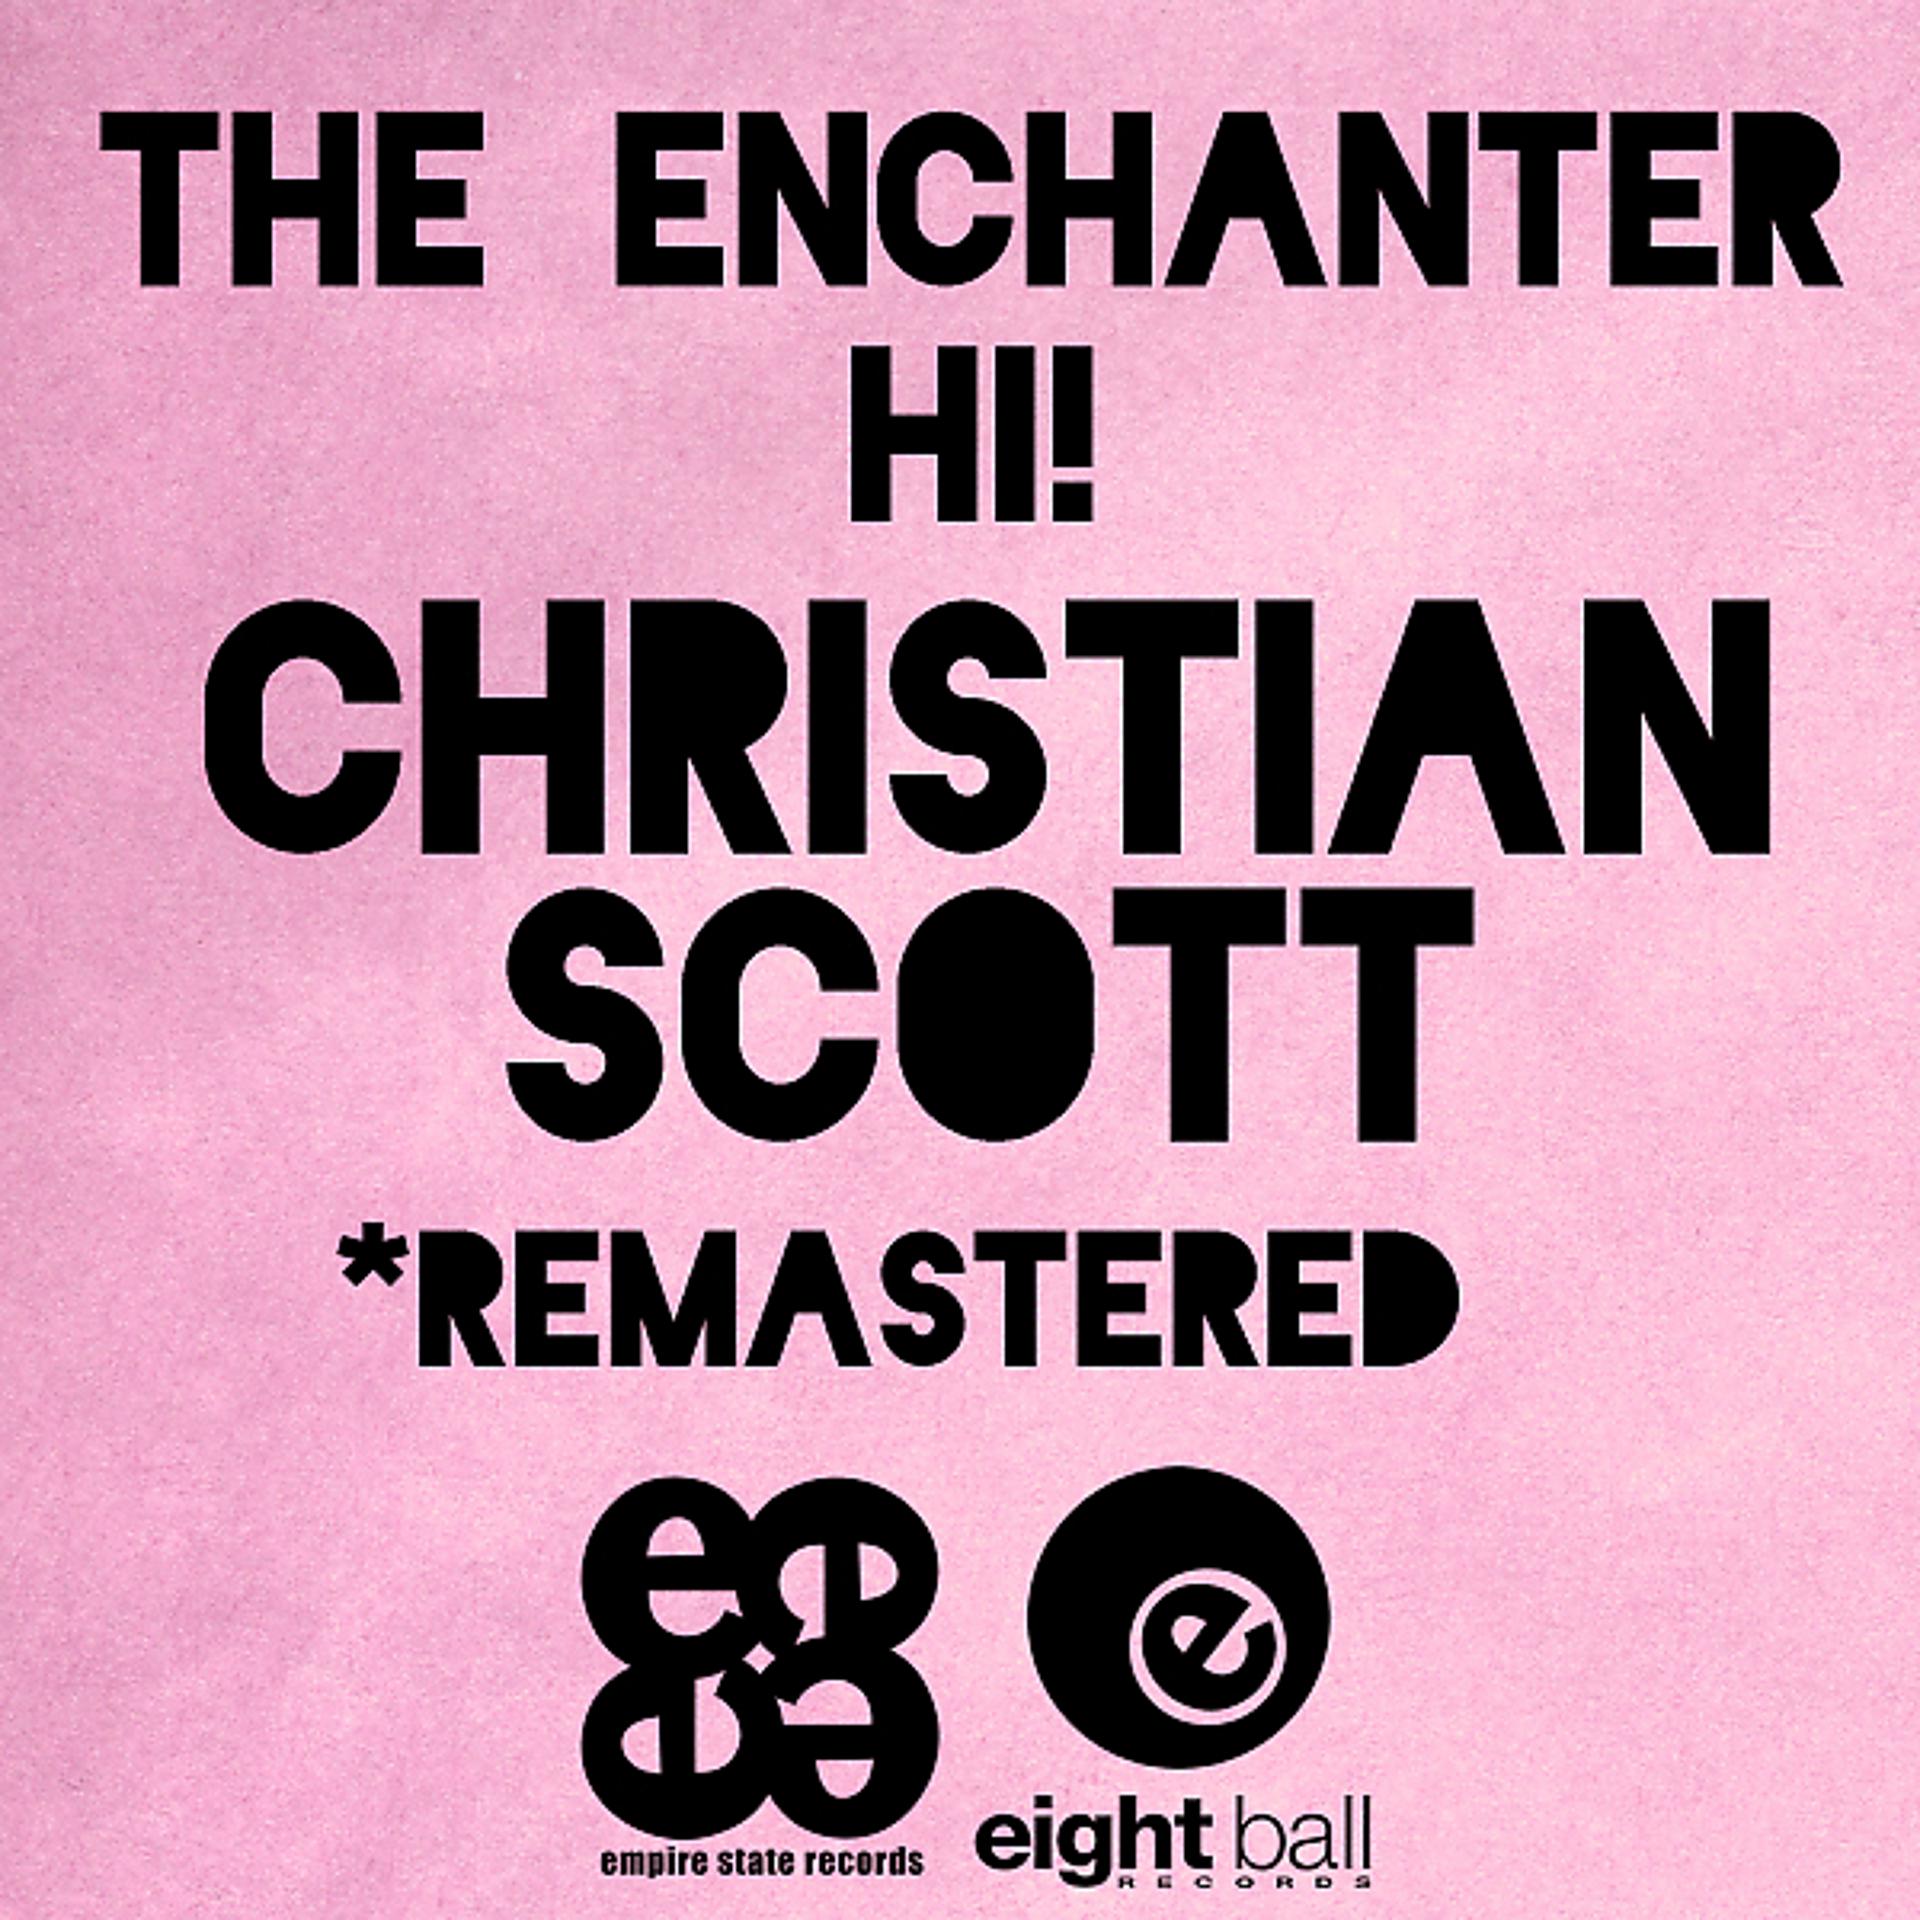 Постер к треку Christian Scott - The Enchanter - Hi! (Wanna Go Progressive)